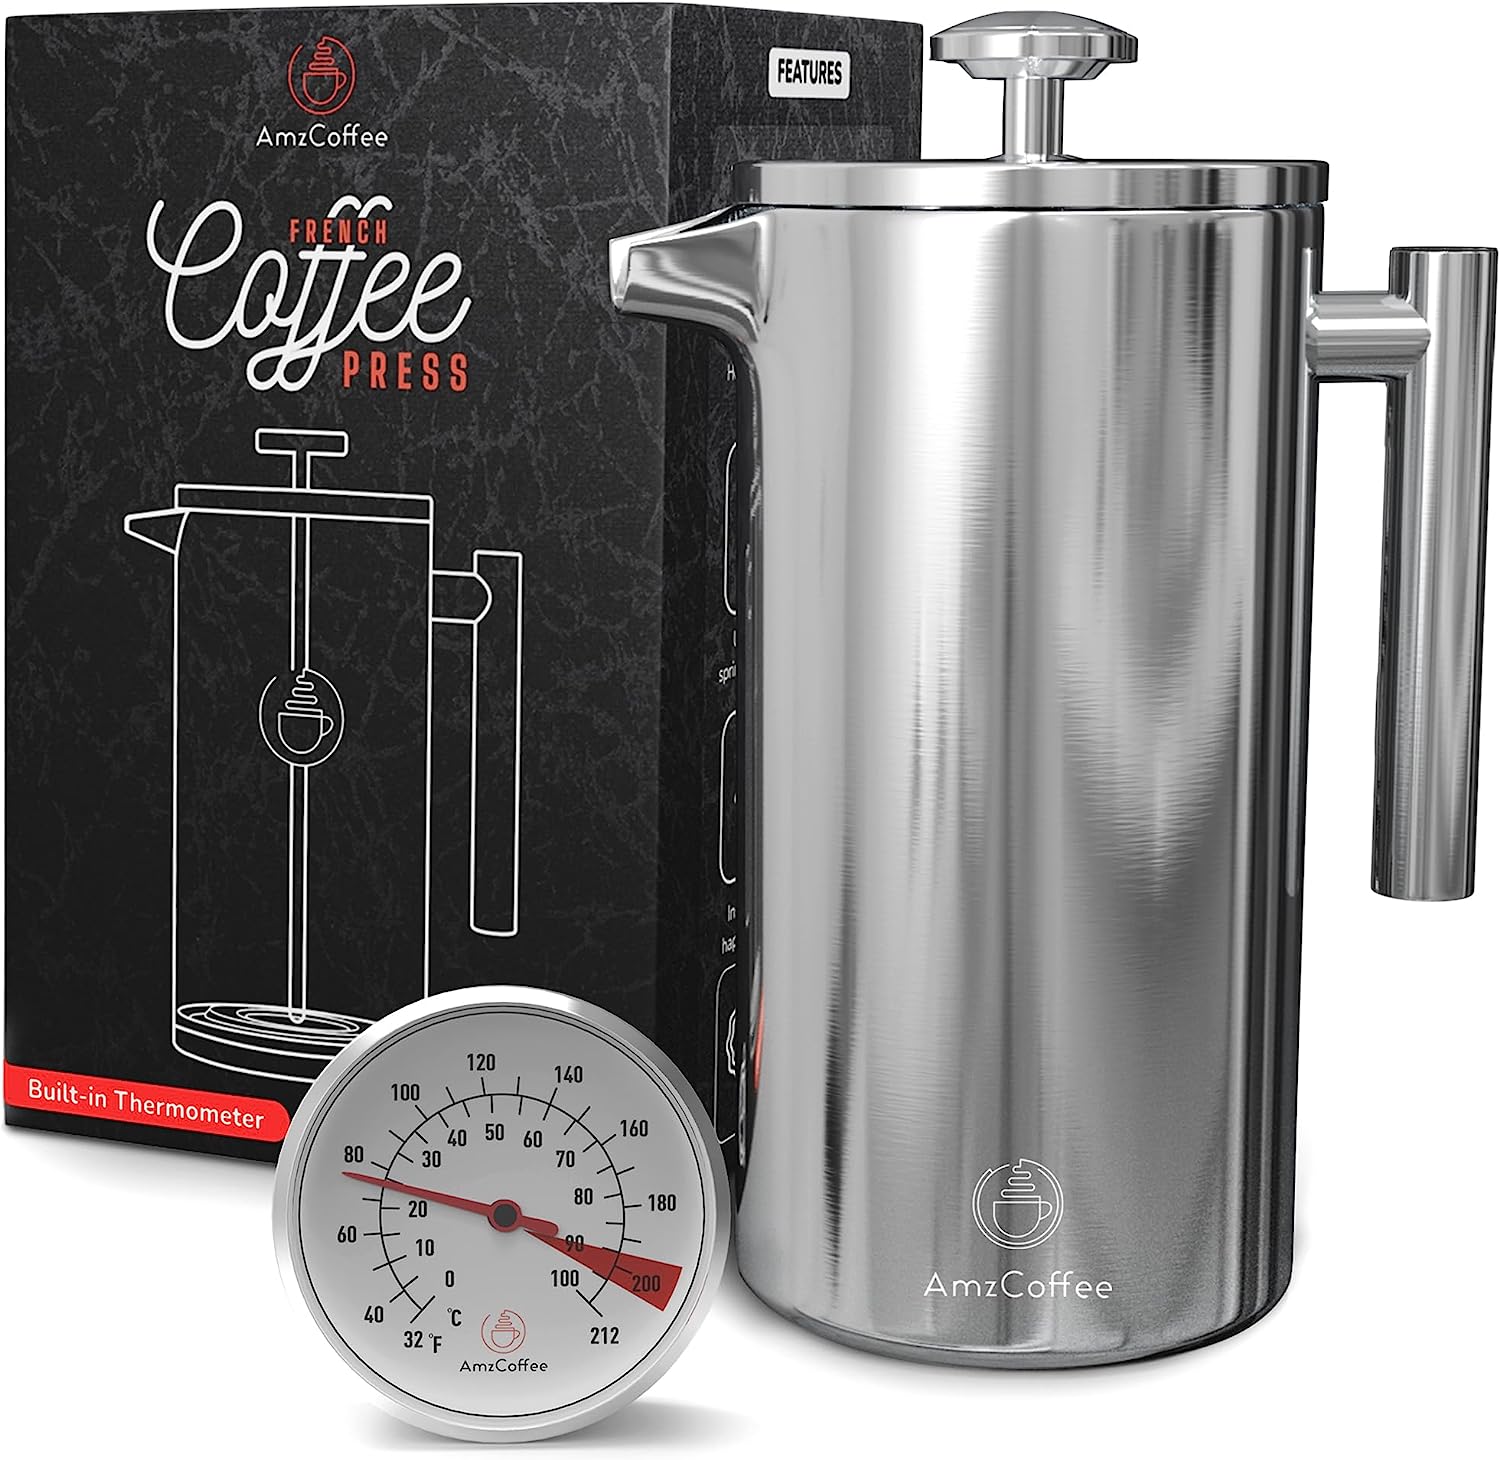 http://honestforwarder.com/uploads/product/DM7jNK0QC8-amzcoffee-french-press-thermo-mit-thermometer-kaffeebereiter-edelstahl-doppelwandig-isolierte-kaffeepresse-frenchpress-kaffeezubereiter-ideal-fur-buro-zuhause-camping-kaffee-0-6-liter80.jpg